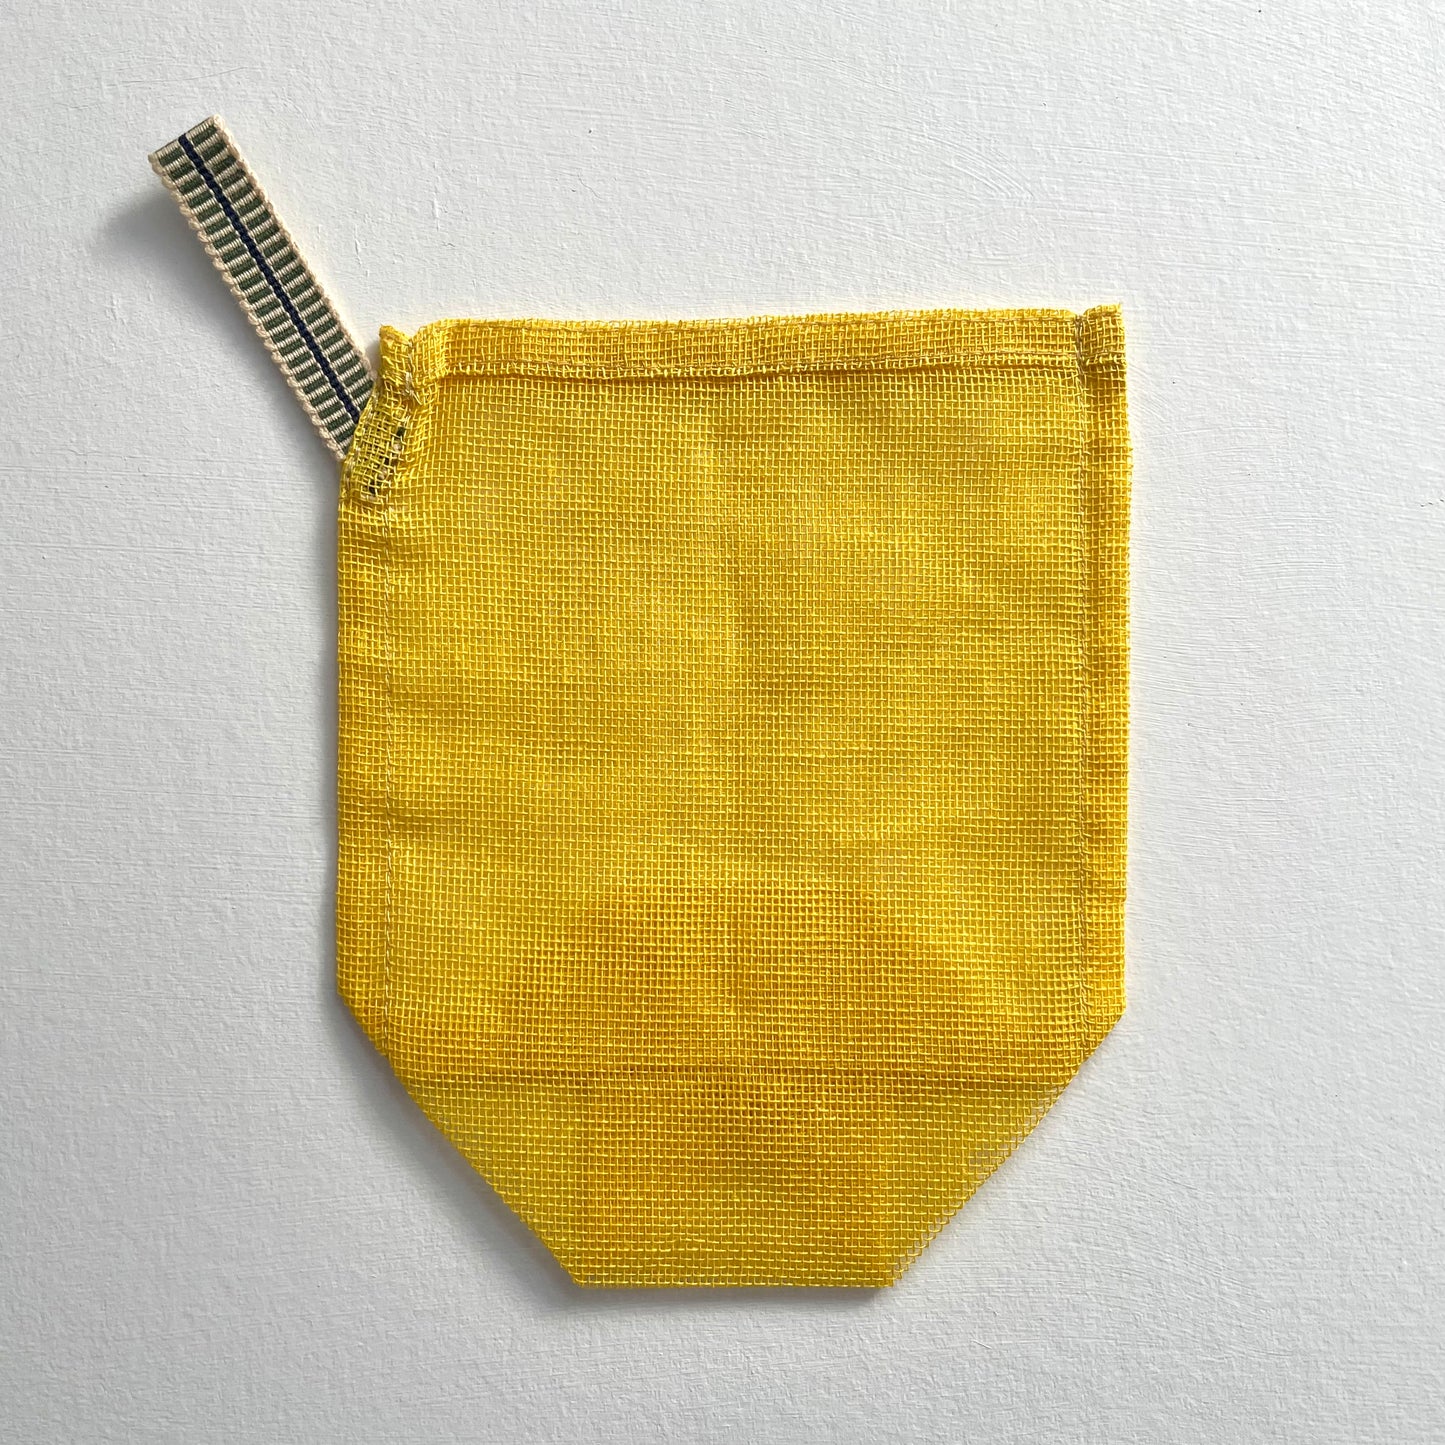 yellow small 100 percent cotton mesh mosquito net yellow small eco produce bag